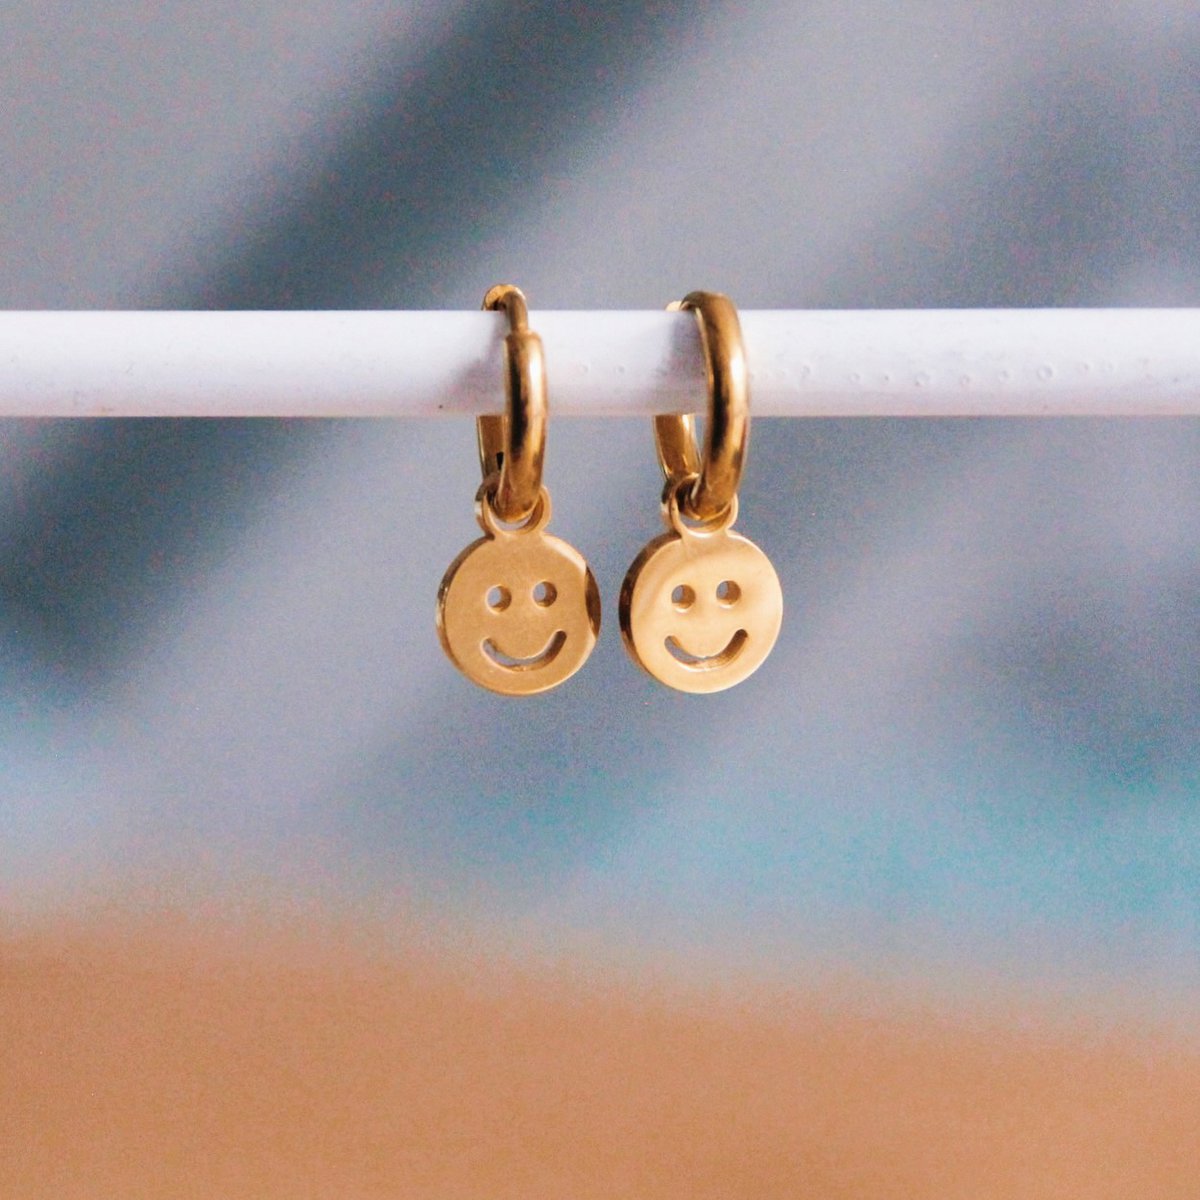 Stainless steel hoop earrings with smiley – gold